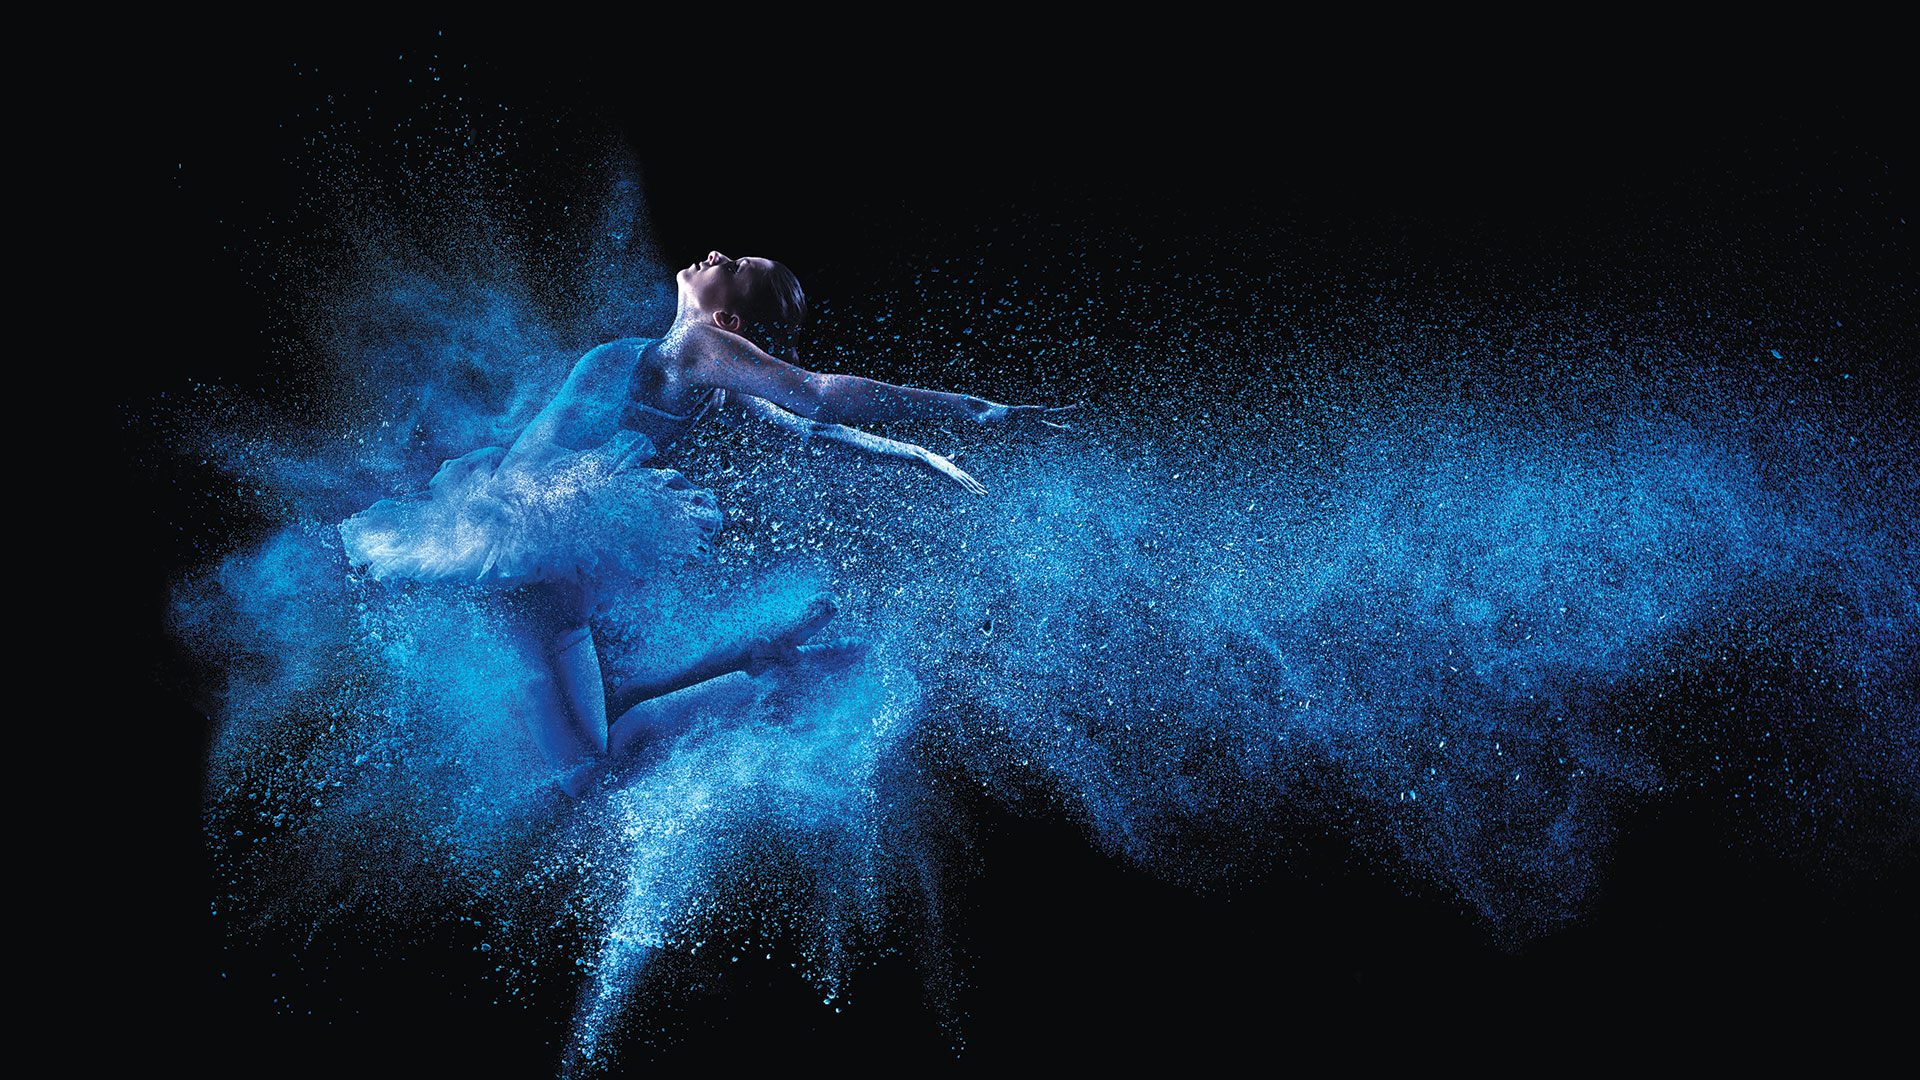 Dancer jumping into blue powder